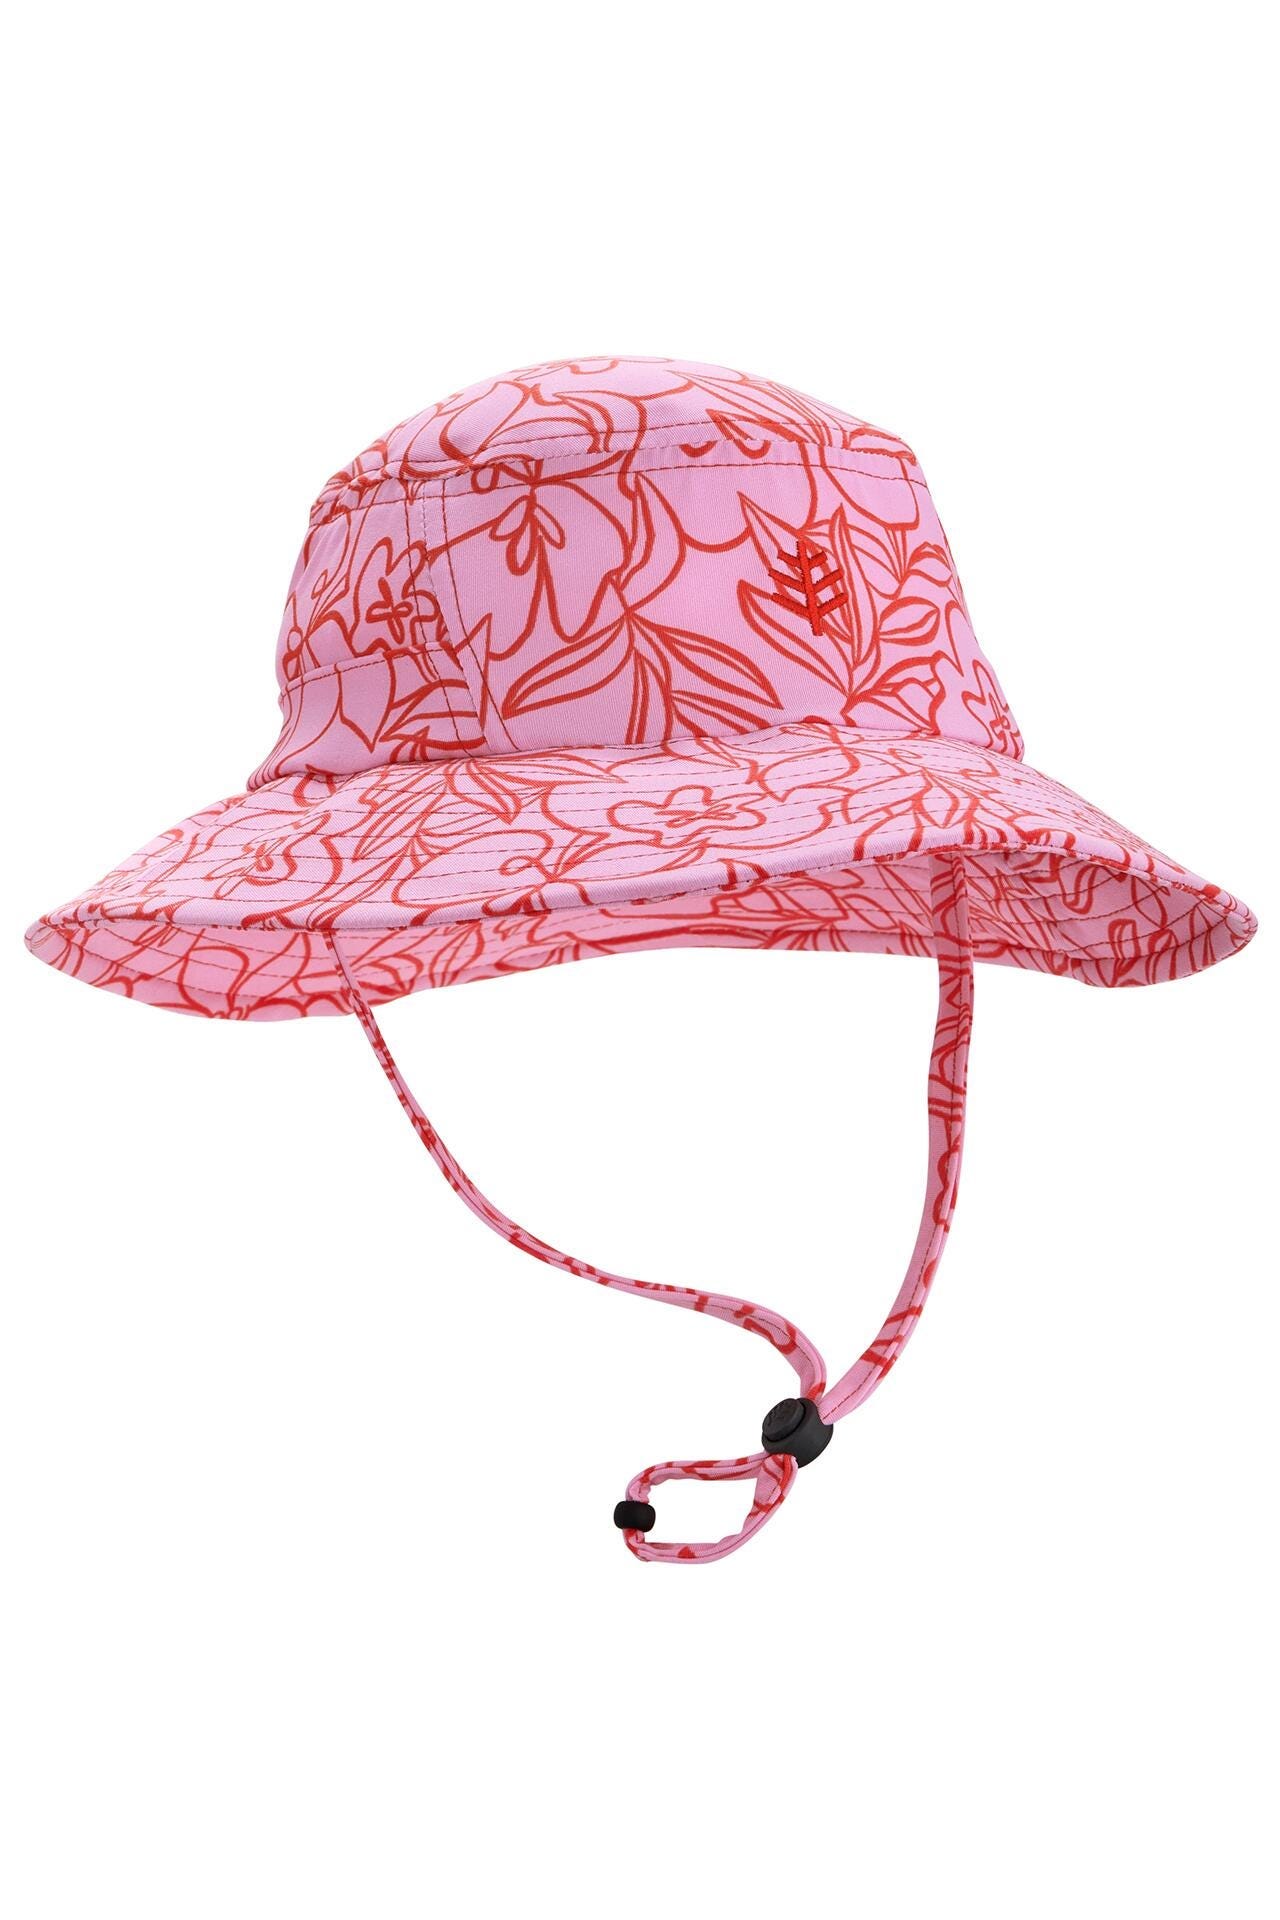 Coolibar UPF 50+ Kid's Caspian Bucket Hat - Sun Protective